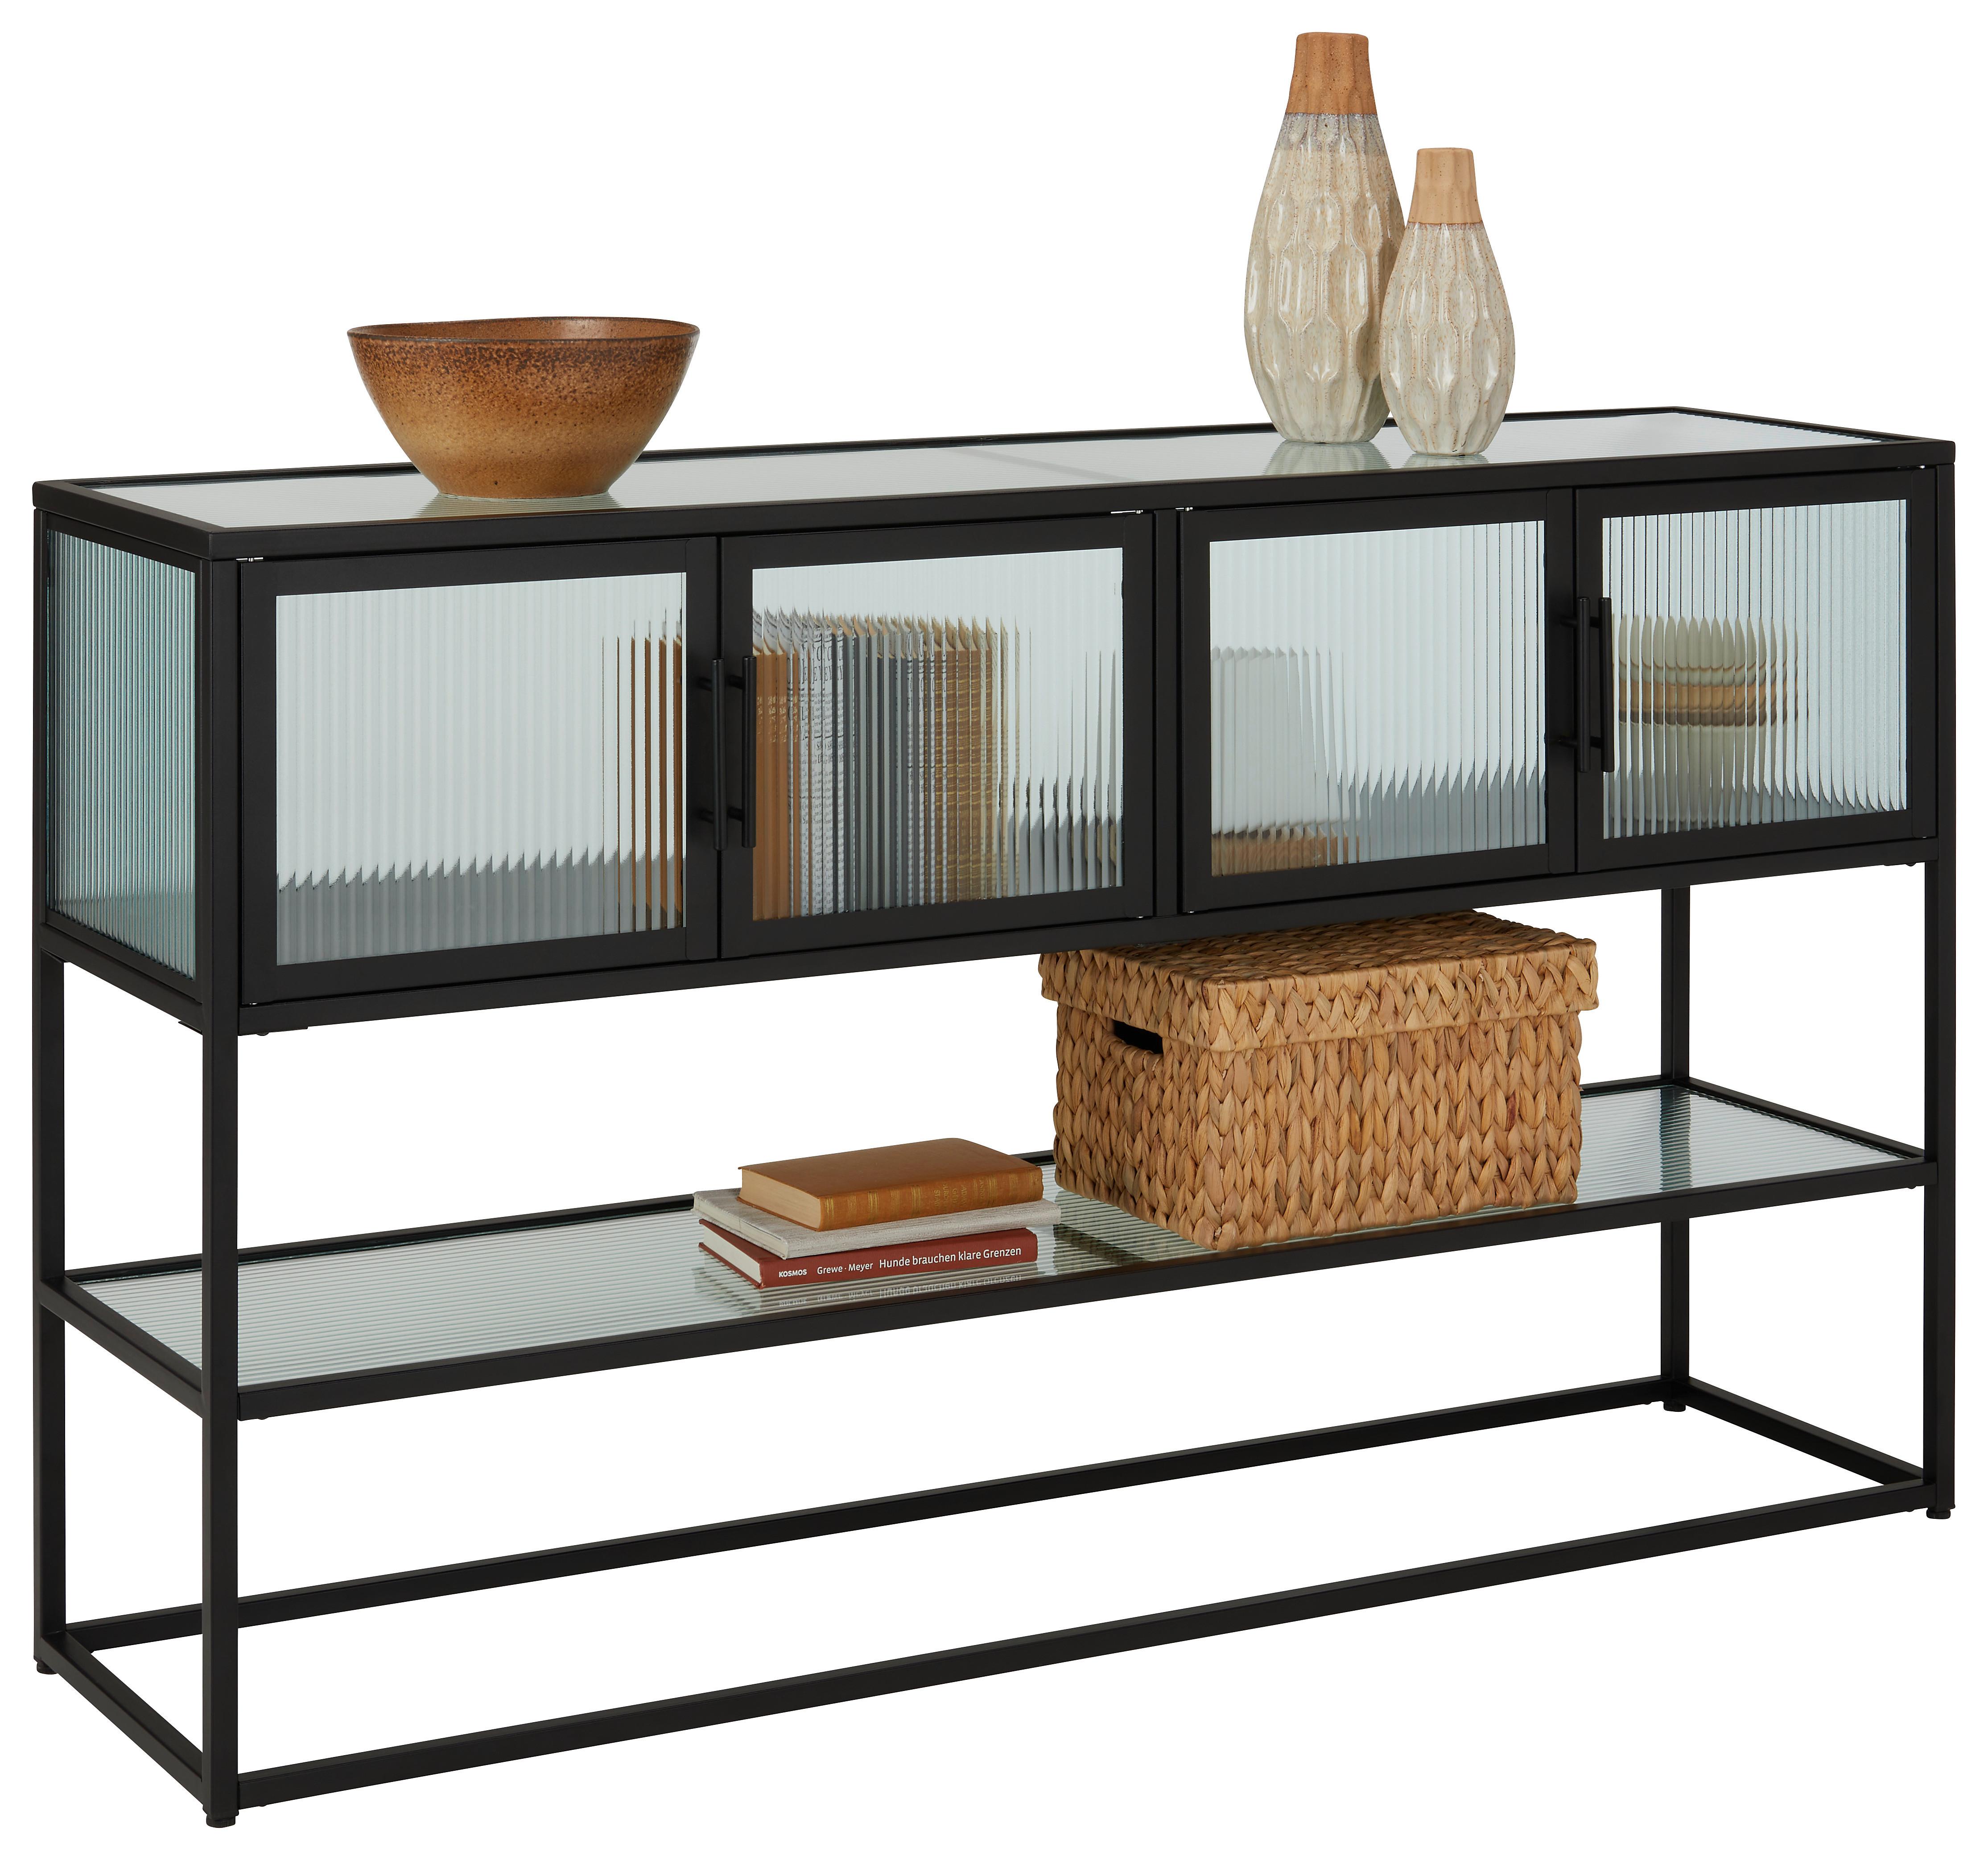 Komoda Cube -Trend- - črna/prozorno, Moderno, kovina/steklo (150/90/38cm) - Modern Living